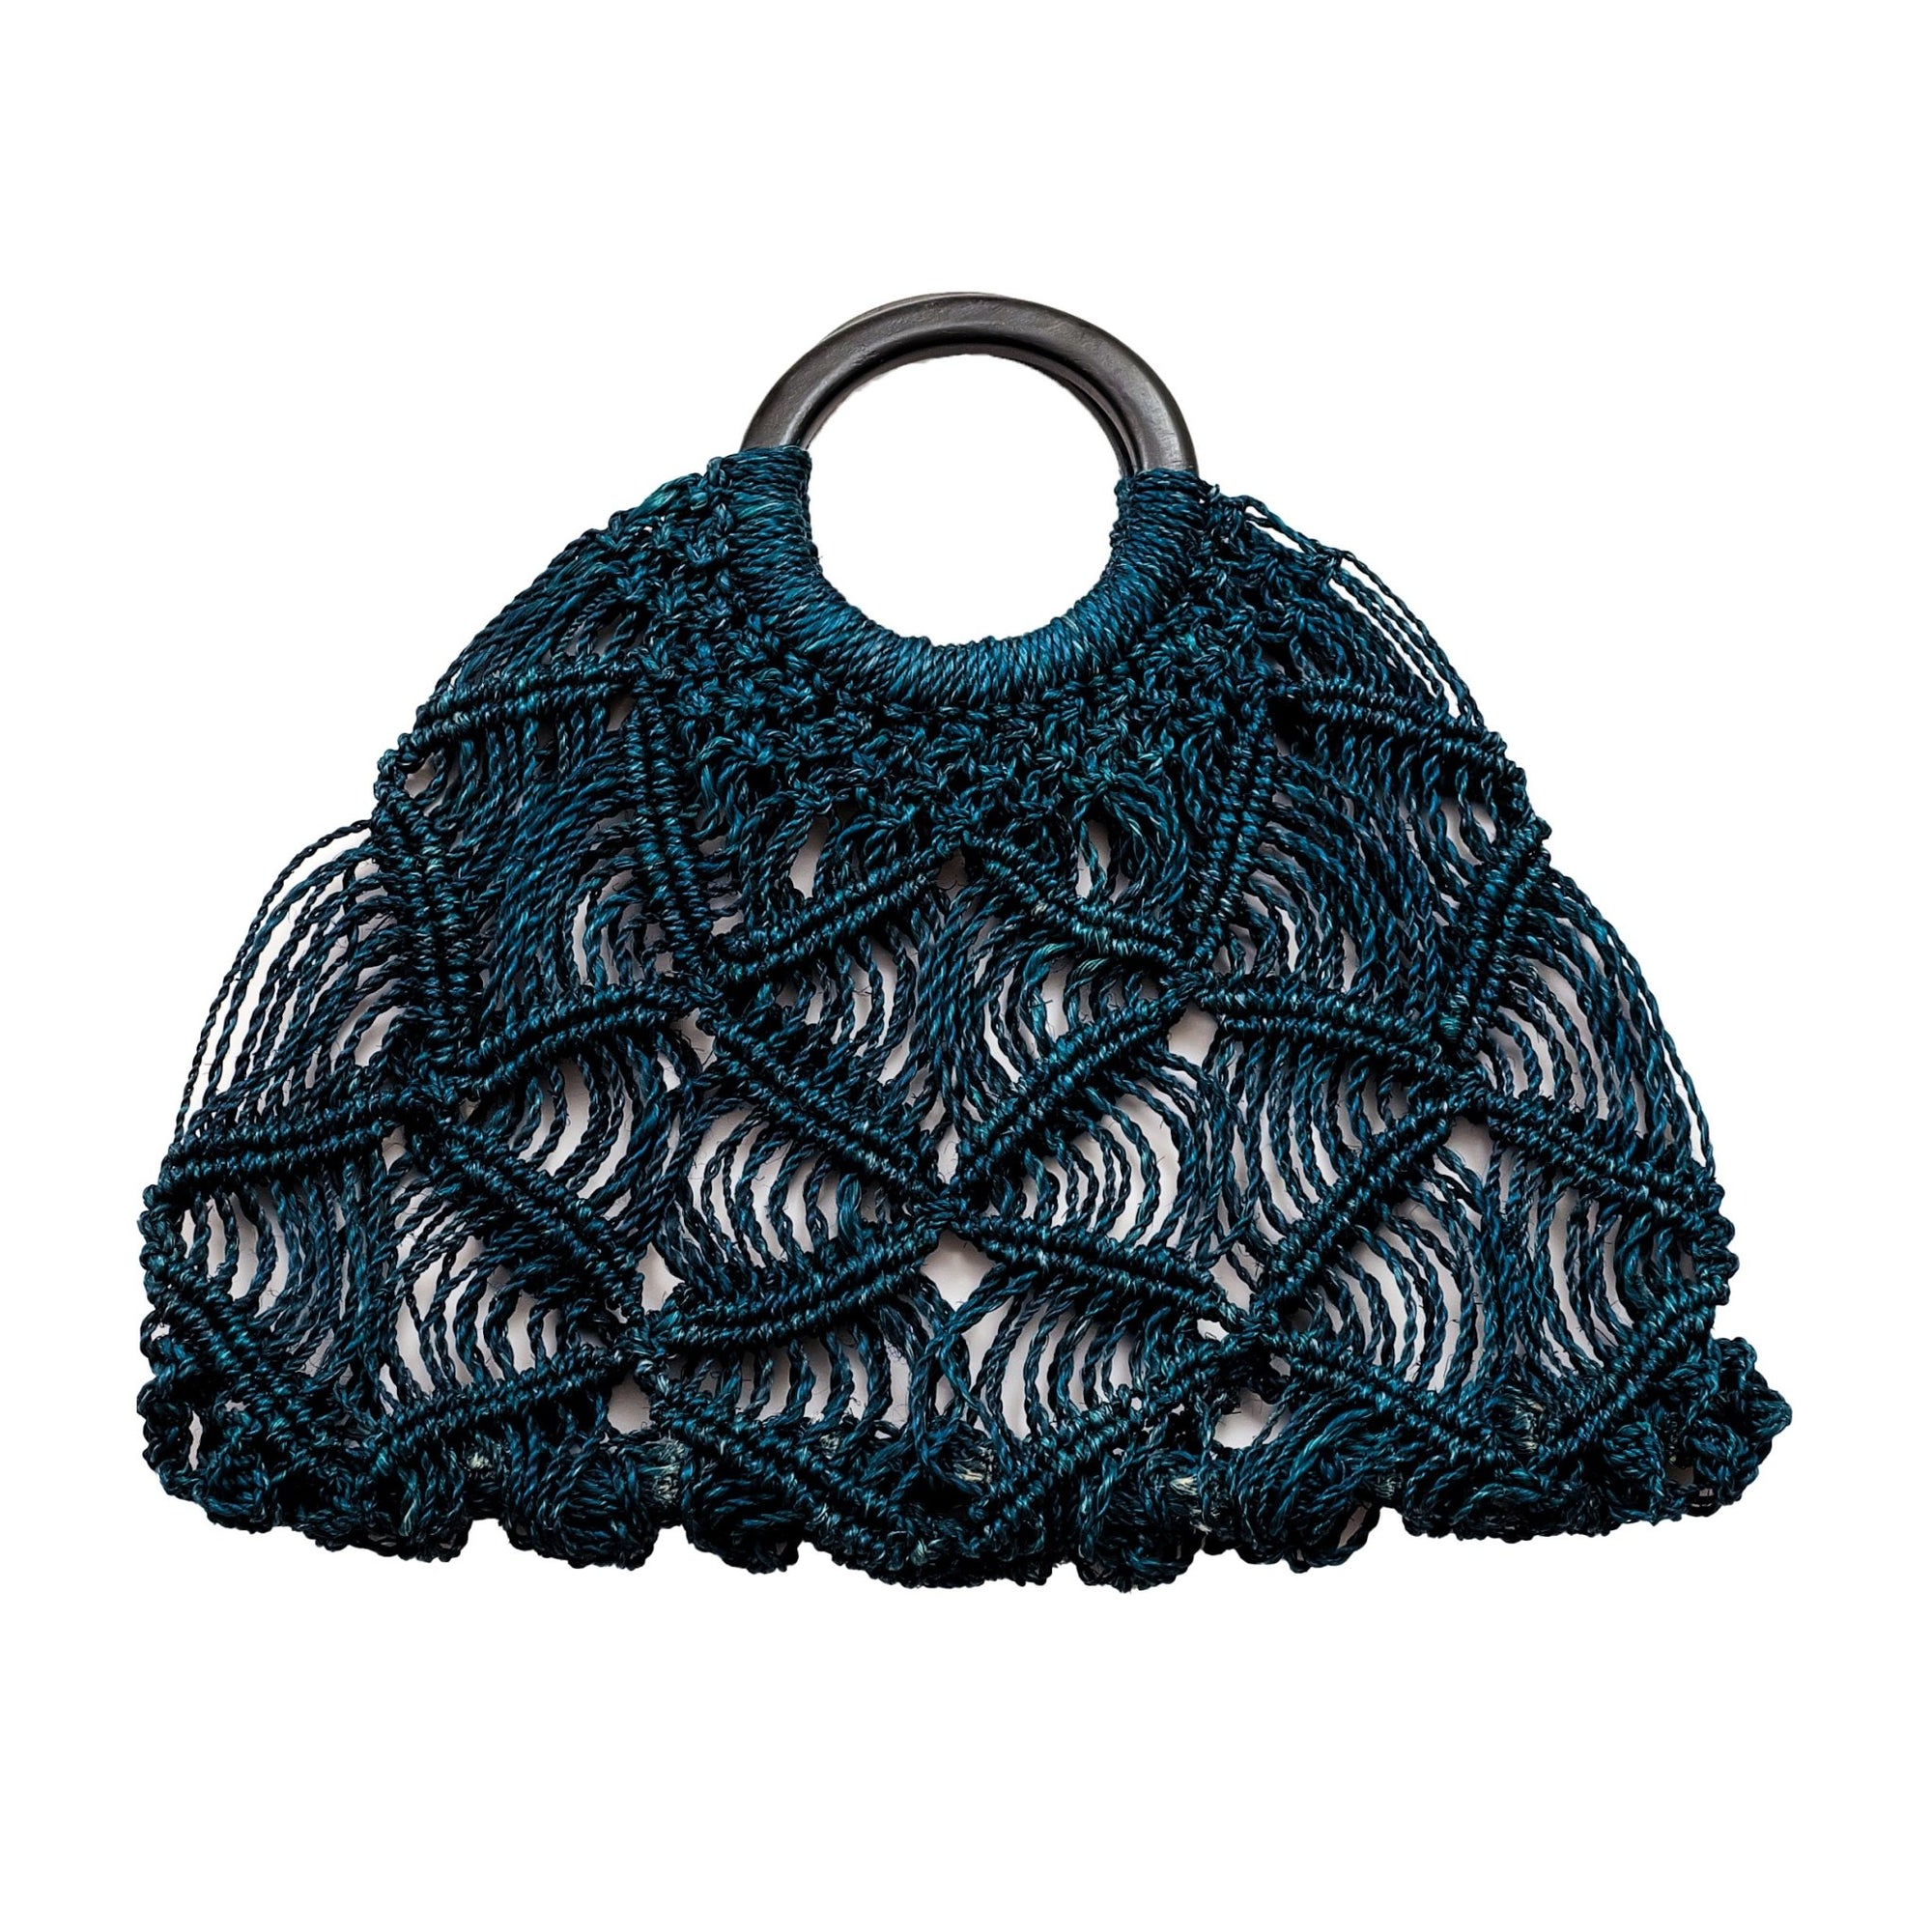 Handbags - Macramé Handbag, Blue | LIKHÂ - LIKHÂ